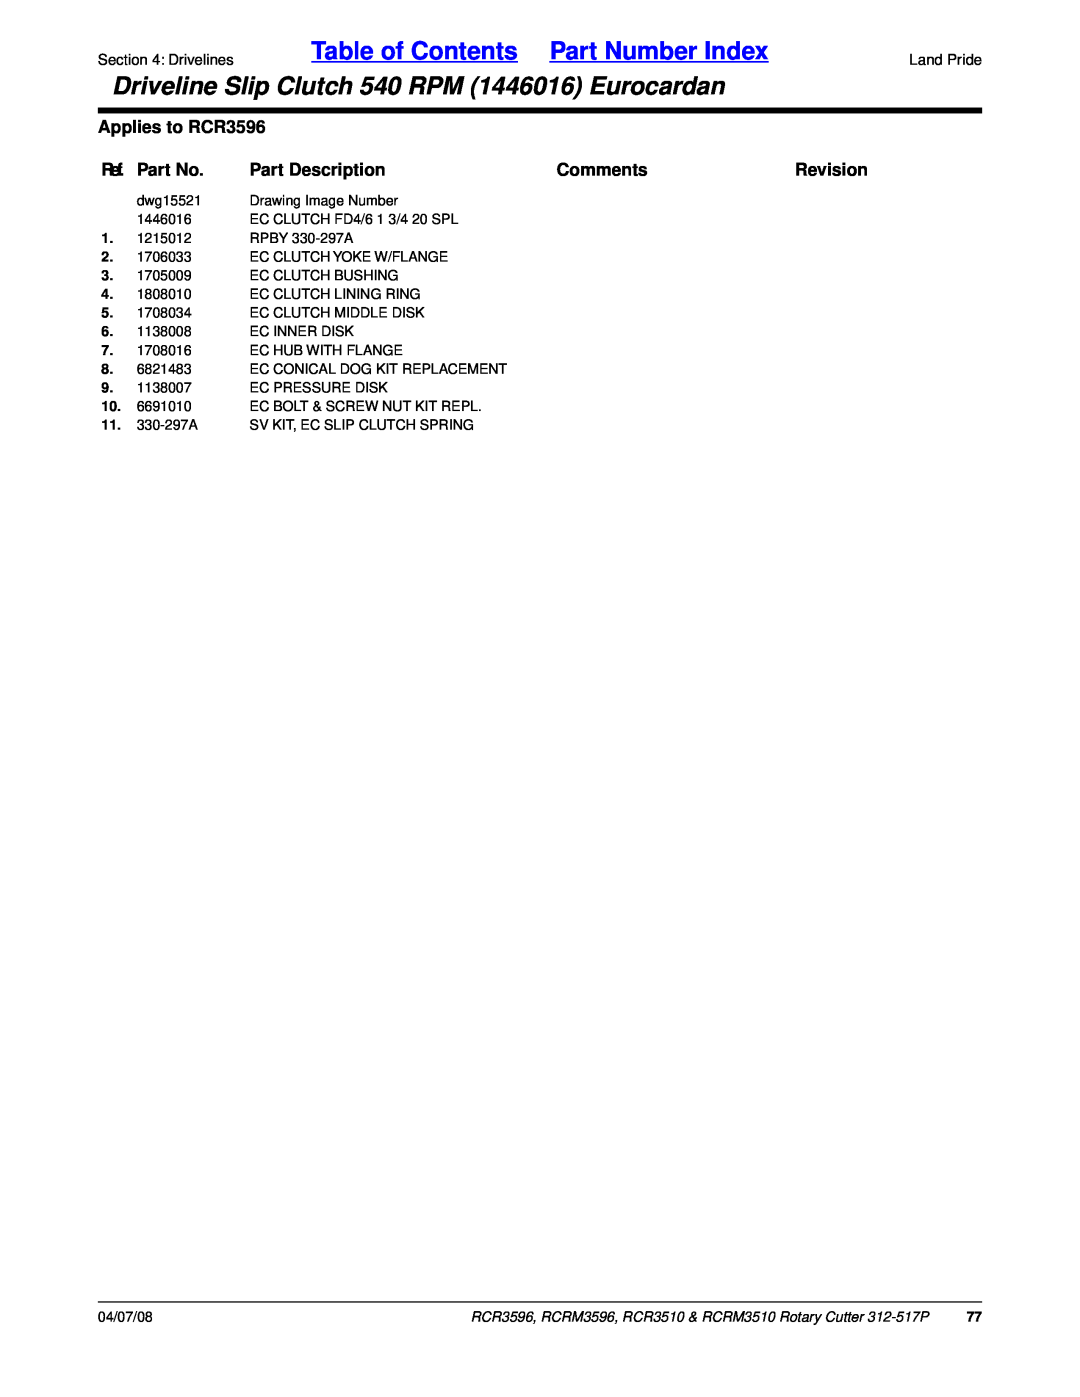 Land Pride RCRM3510 Table of Contents Part Number Index, Driveline Slip Clutch 540 RPM 1446016 Eurocardan, Ref. Part No 